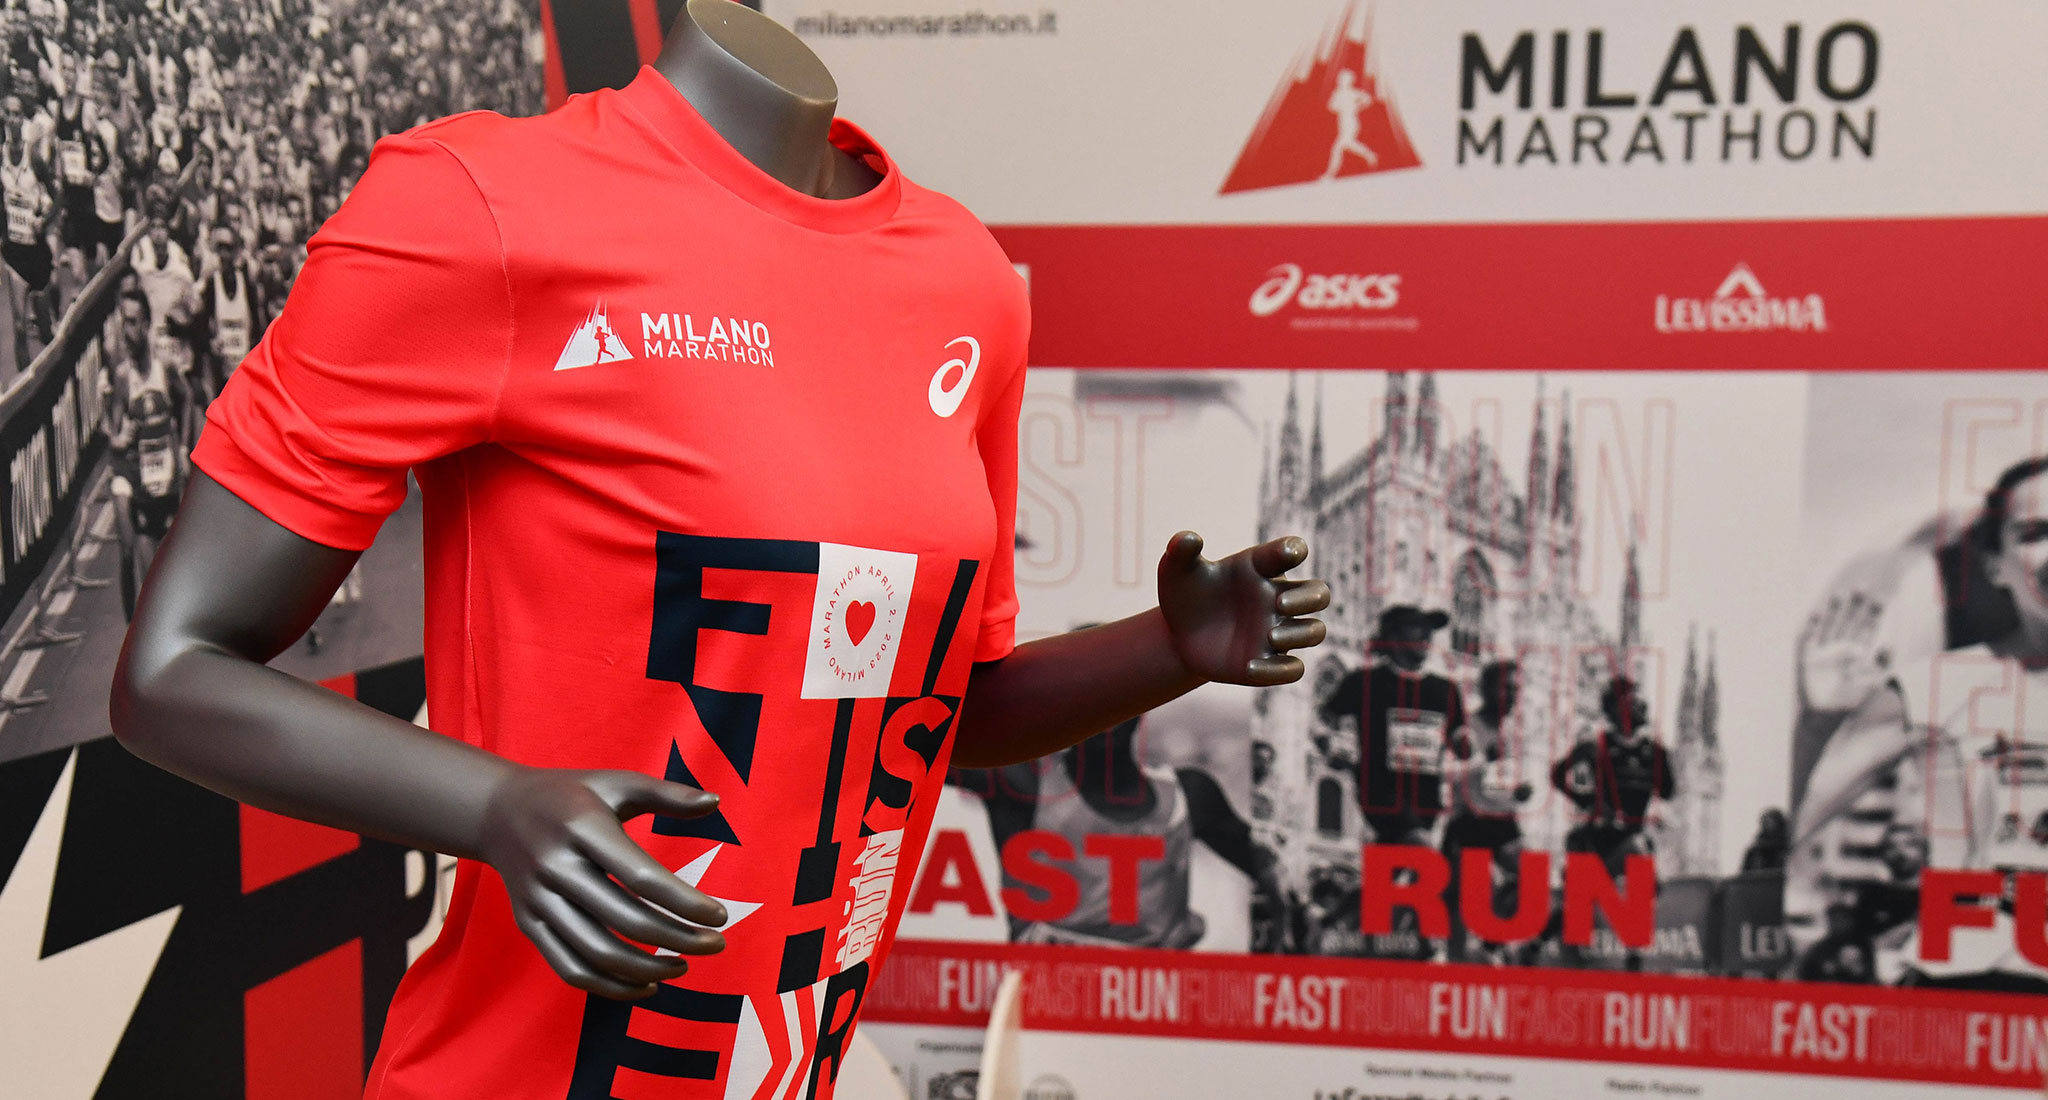 Milano Marathon: here is the 21st edition